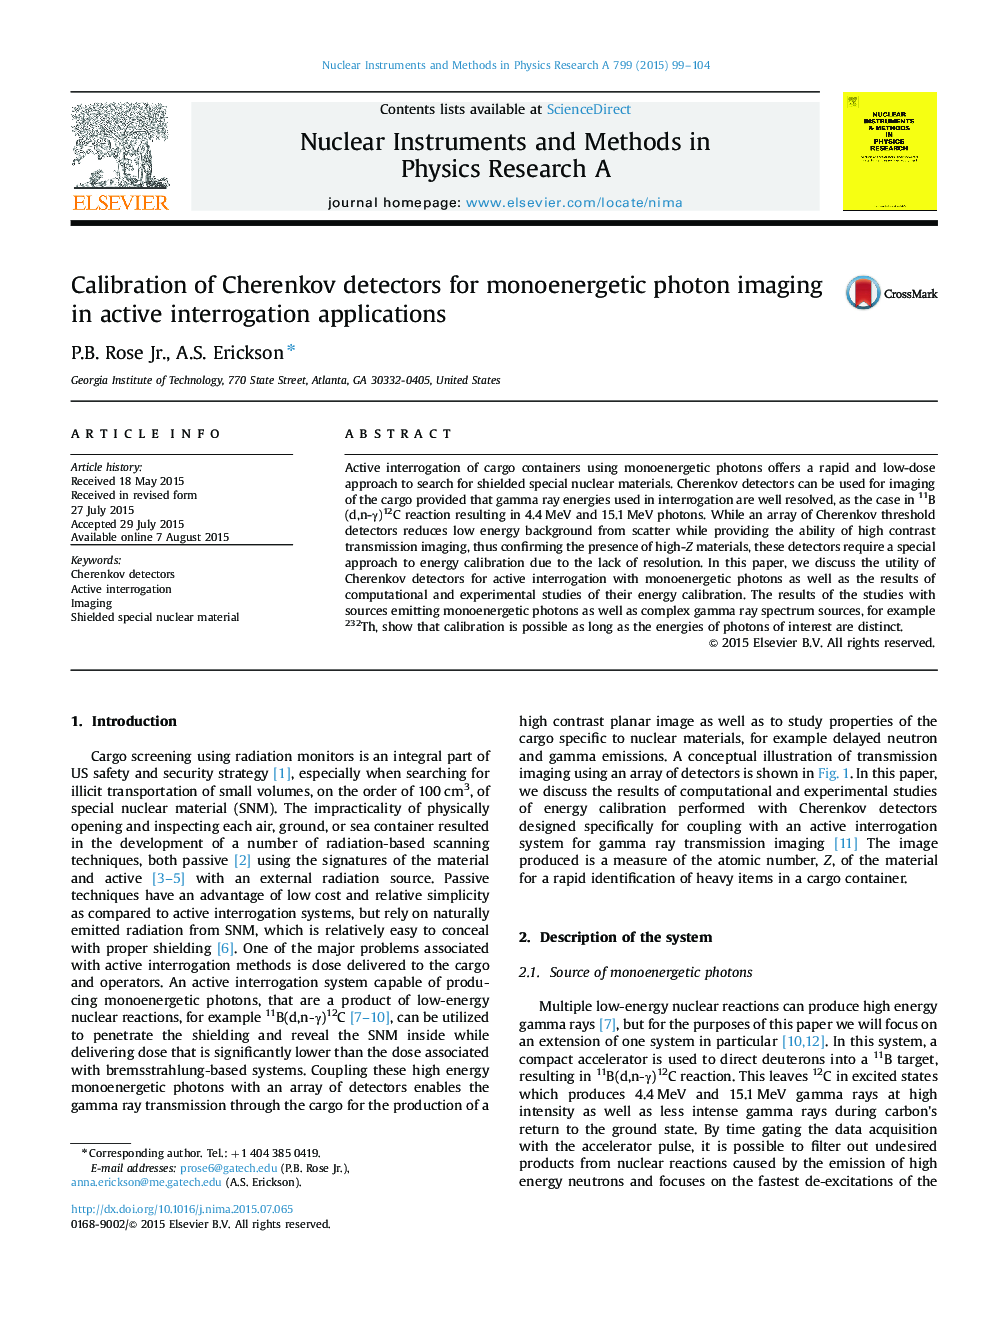 Calibration of Cherenkov detectors for monoenergetic photon imaging in active interrogation applications